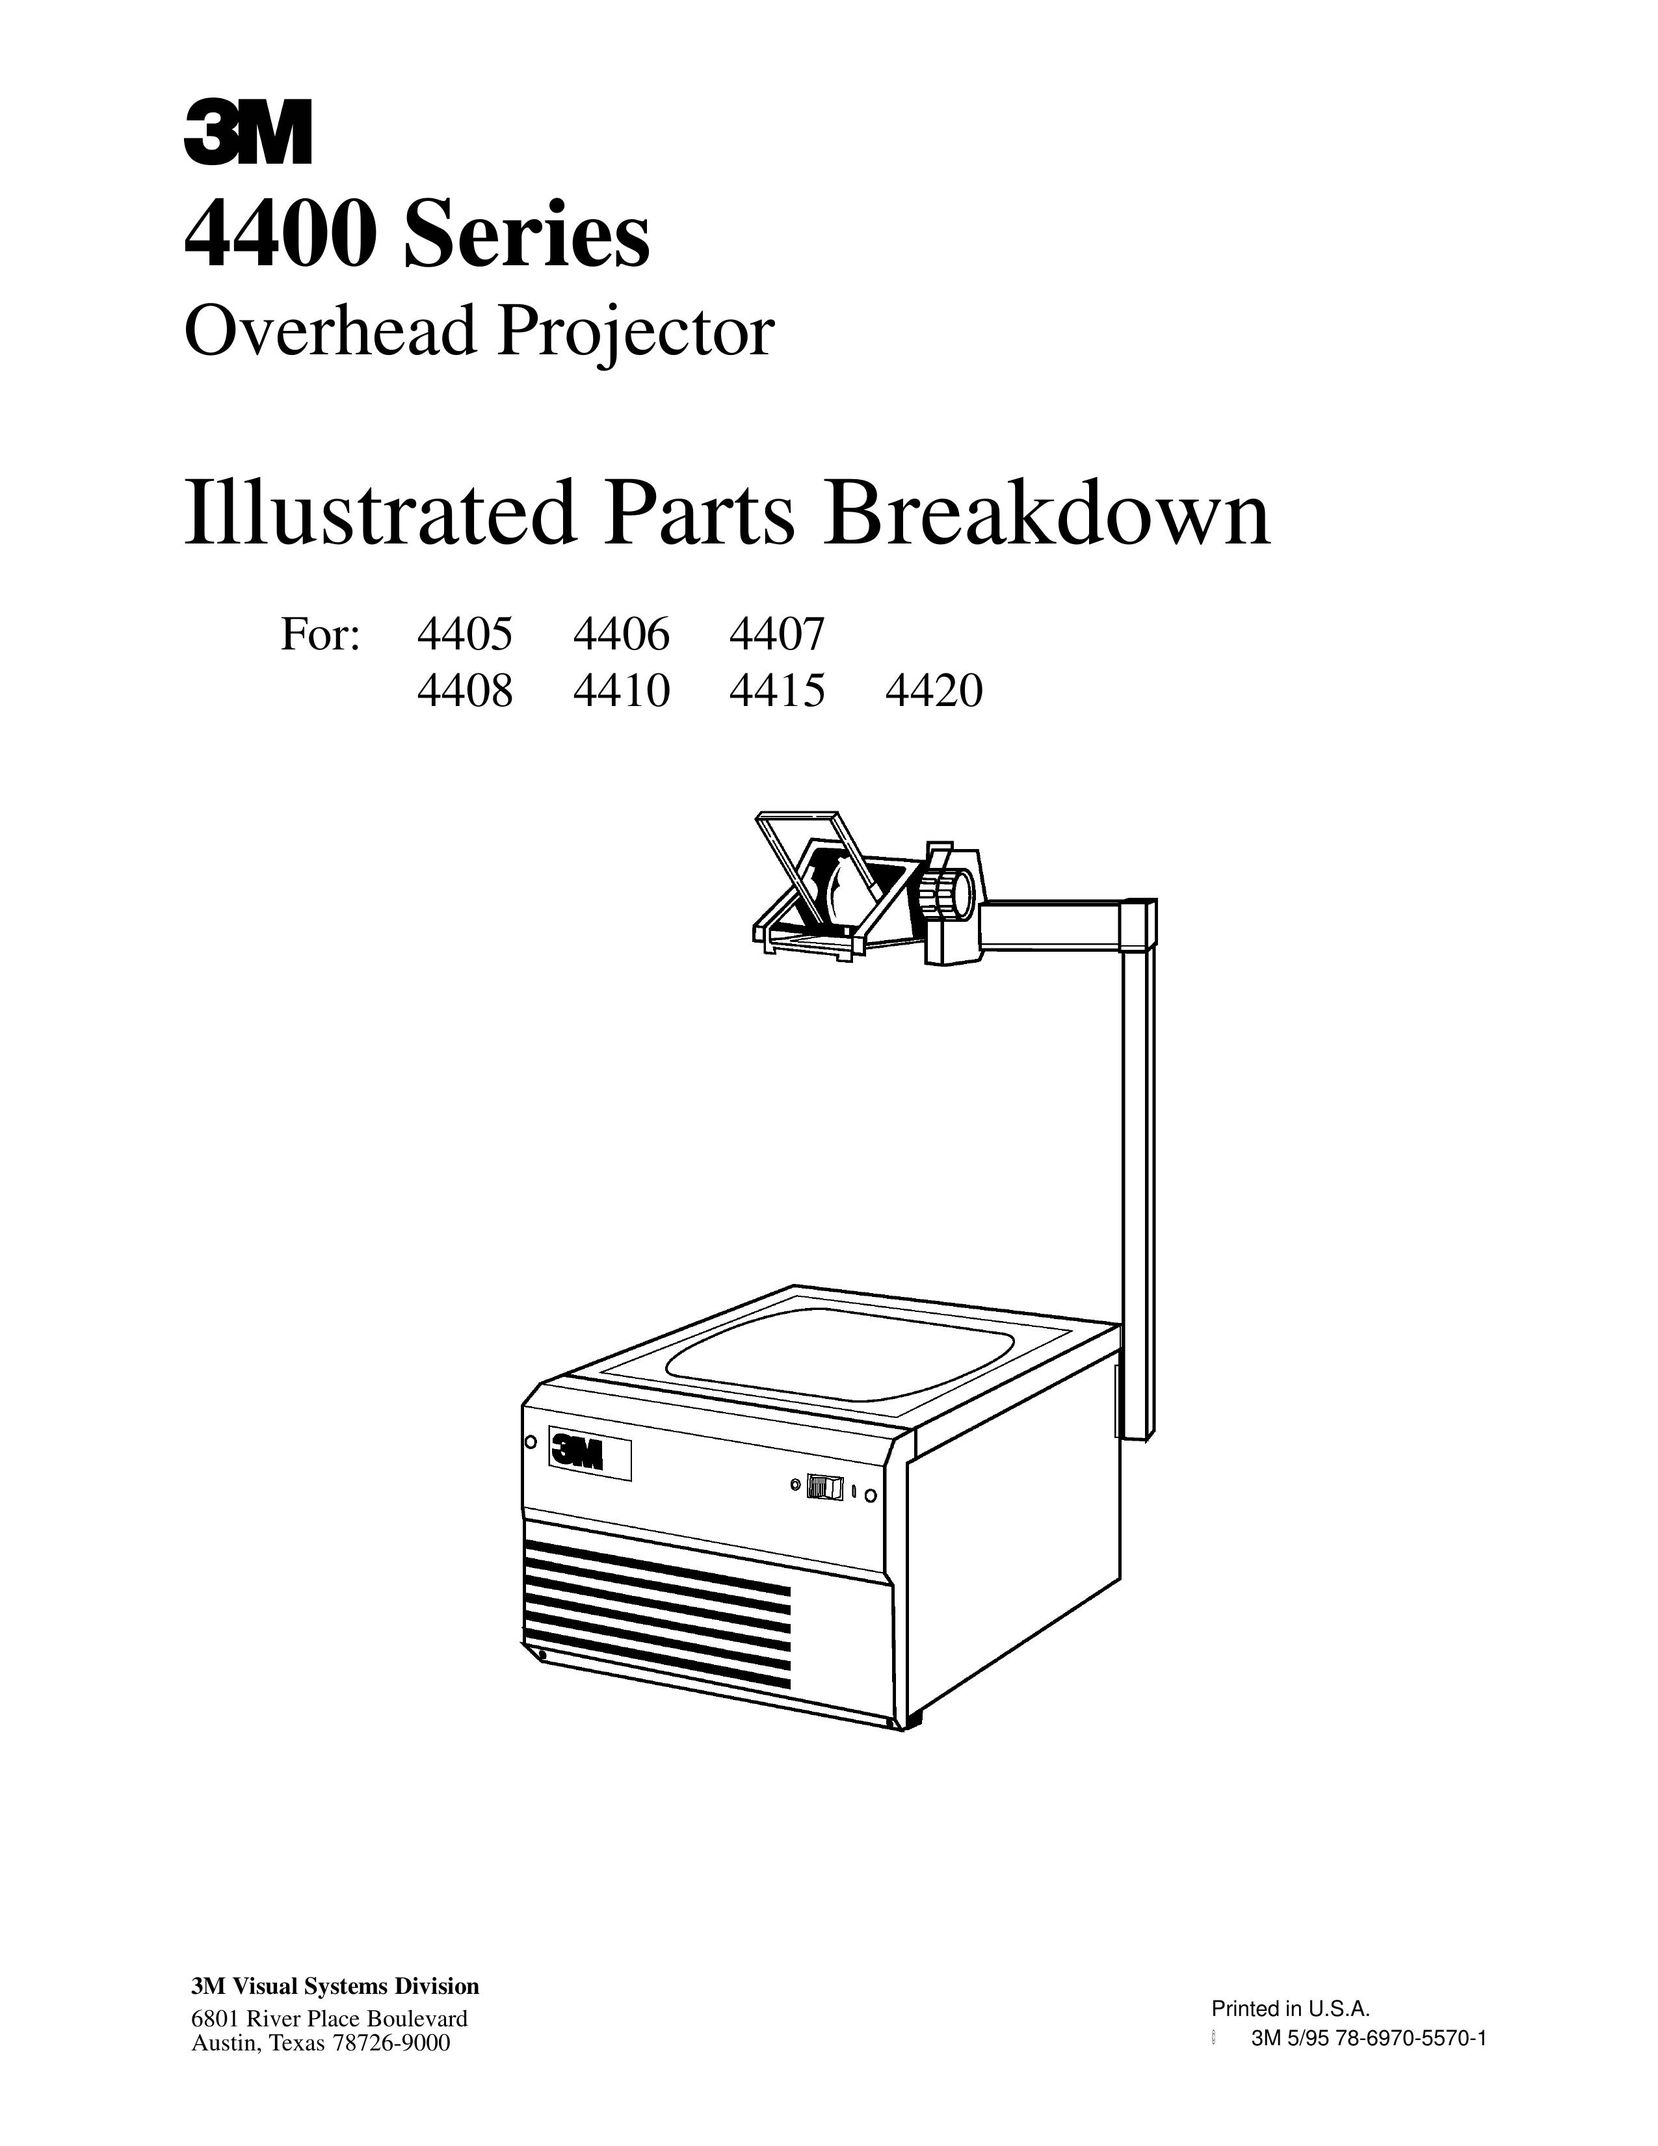 3M 4410 Projector User Manual